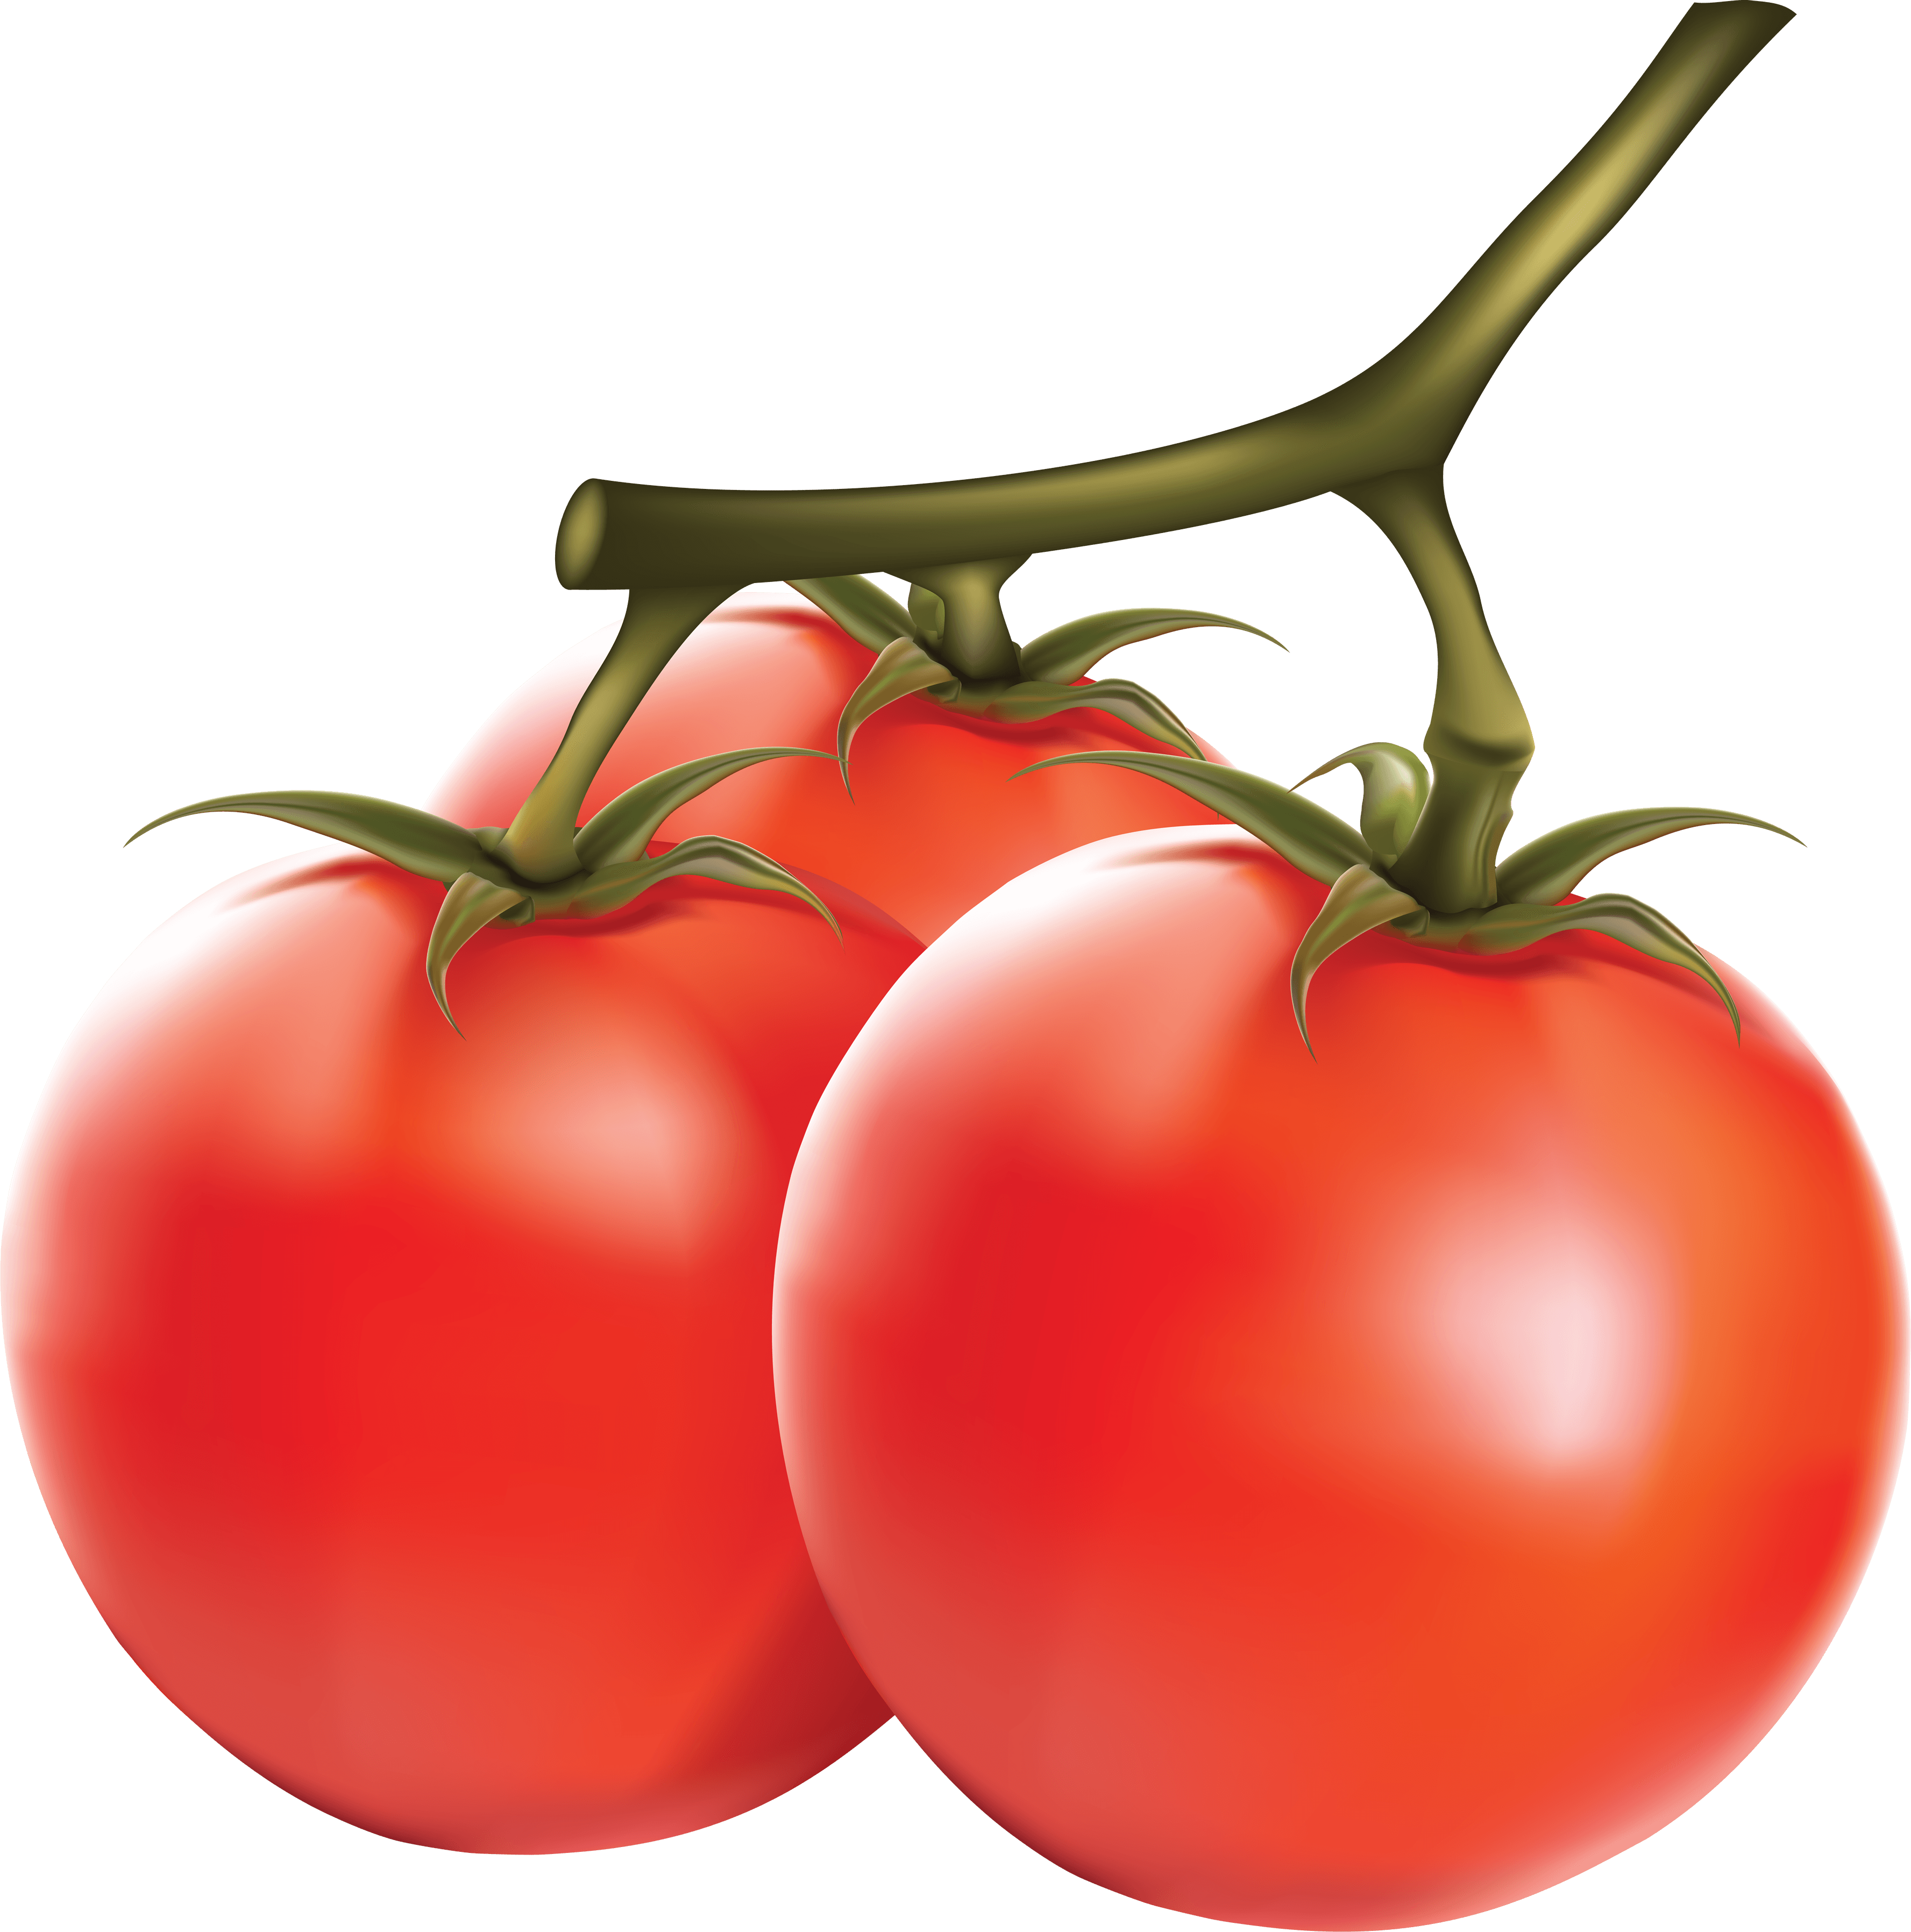 Tomato PNG Transparent Image